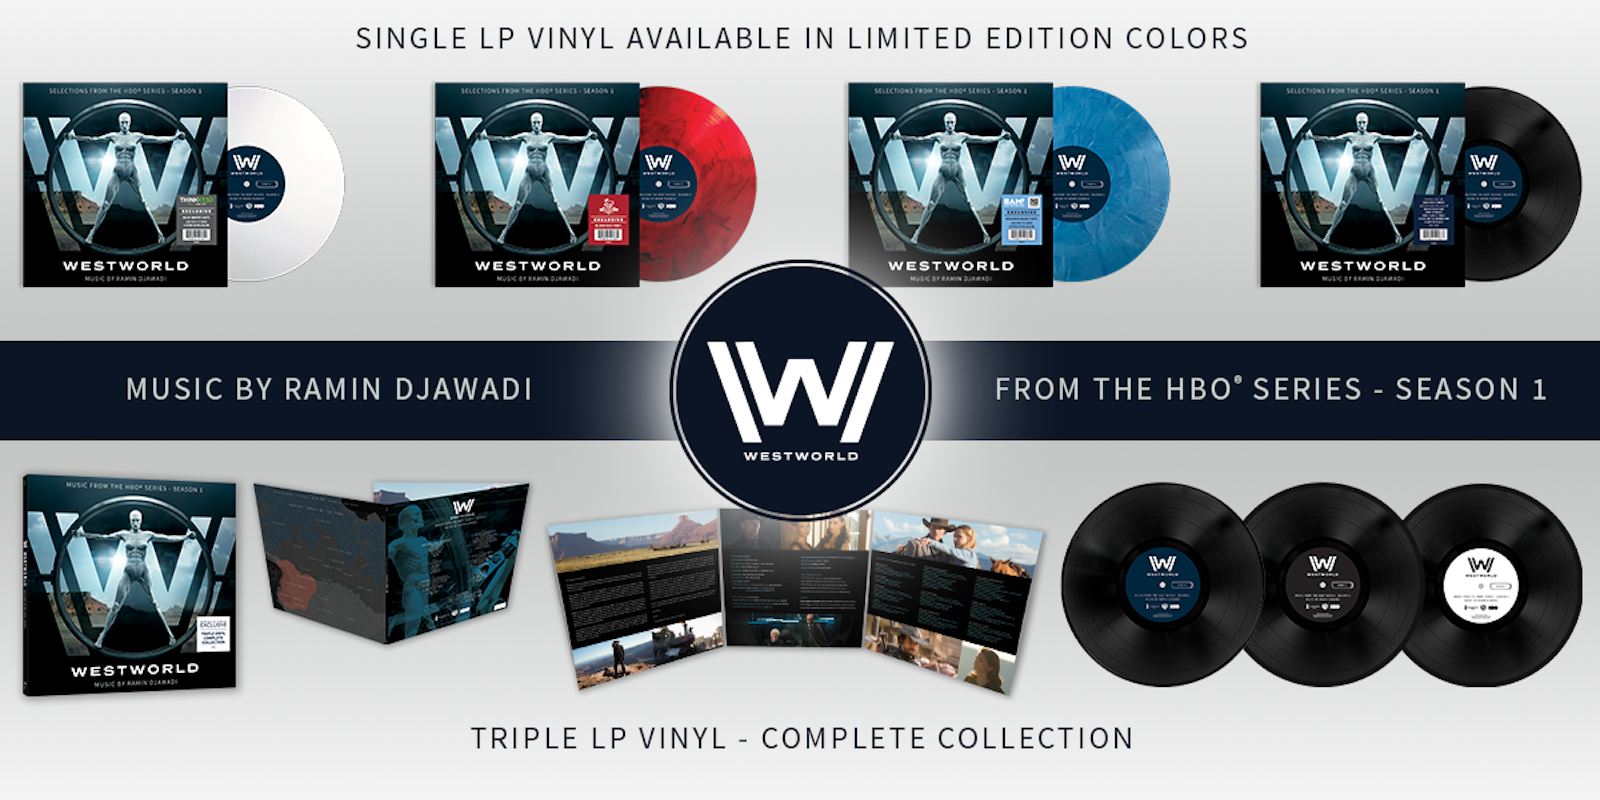 Westworld limited edition vinyl